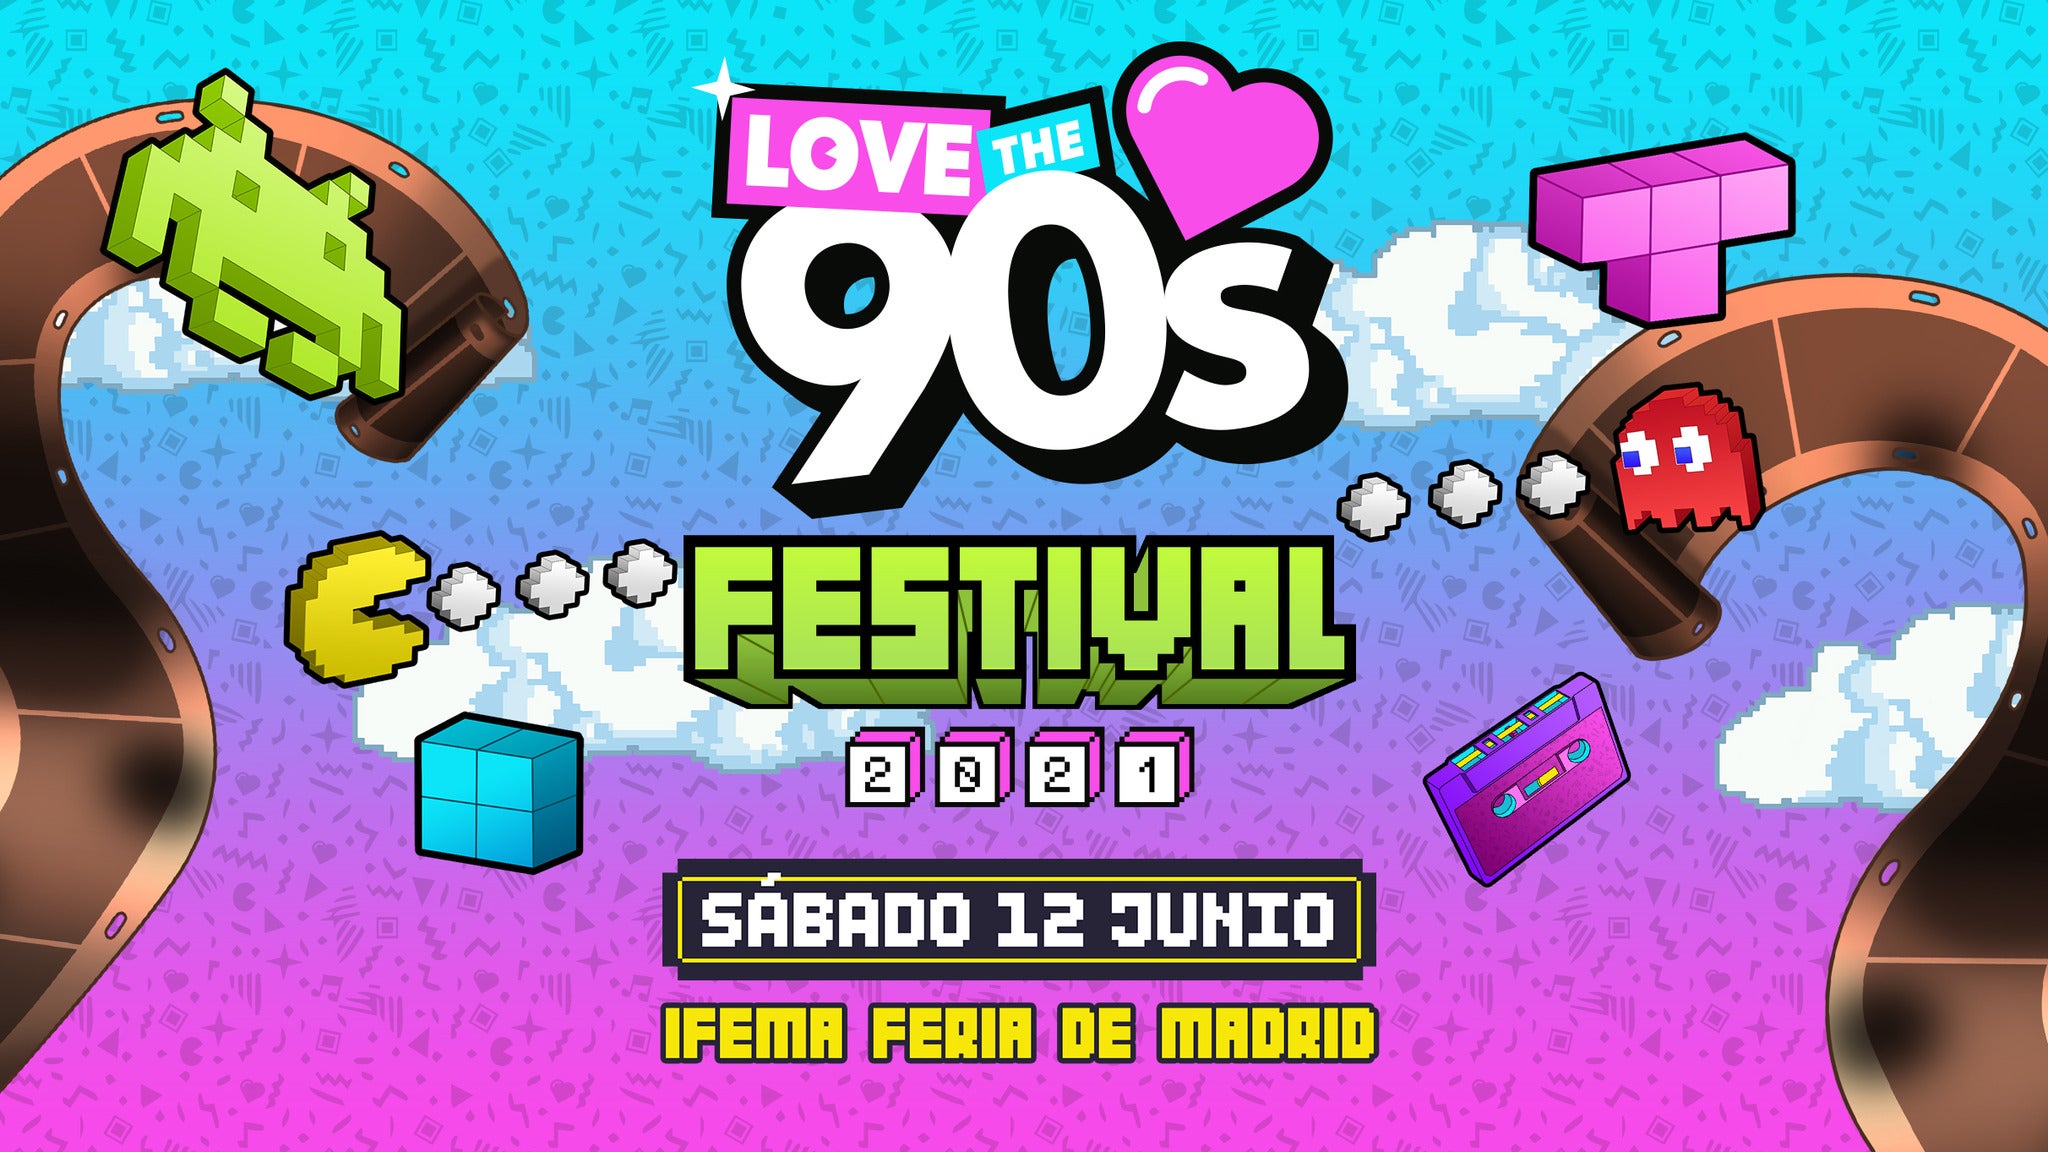 Love the 90's Festival